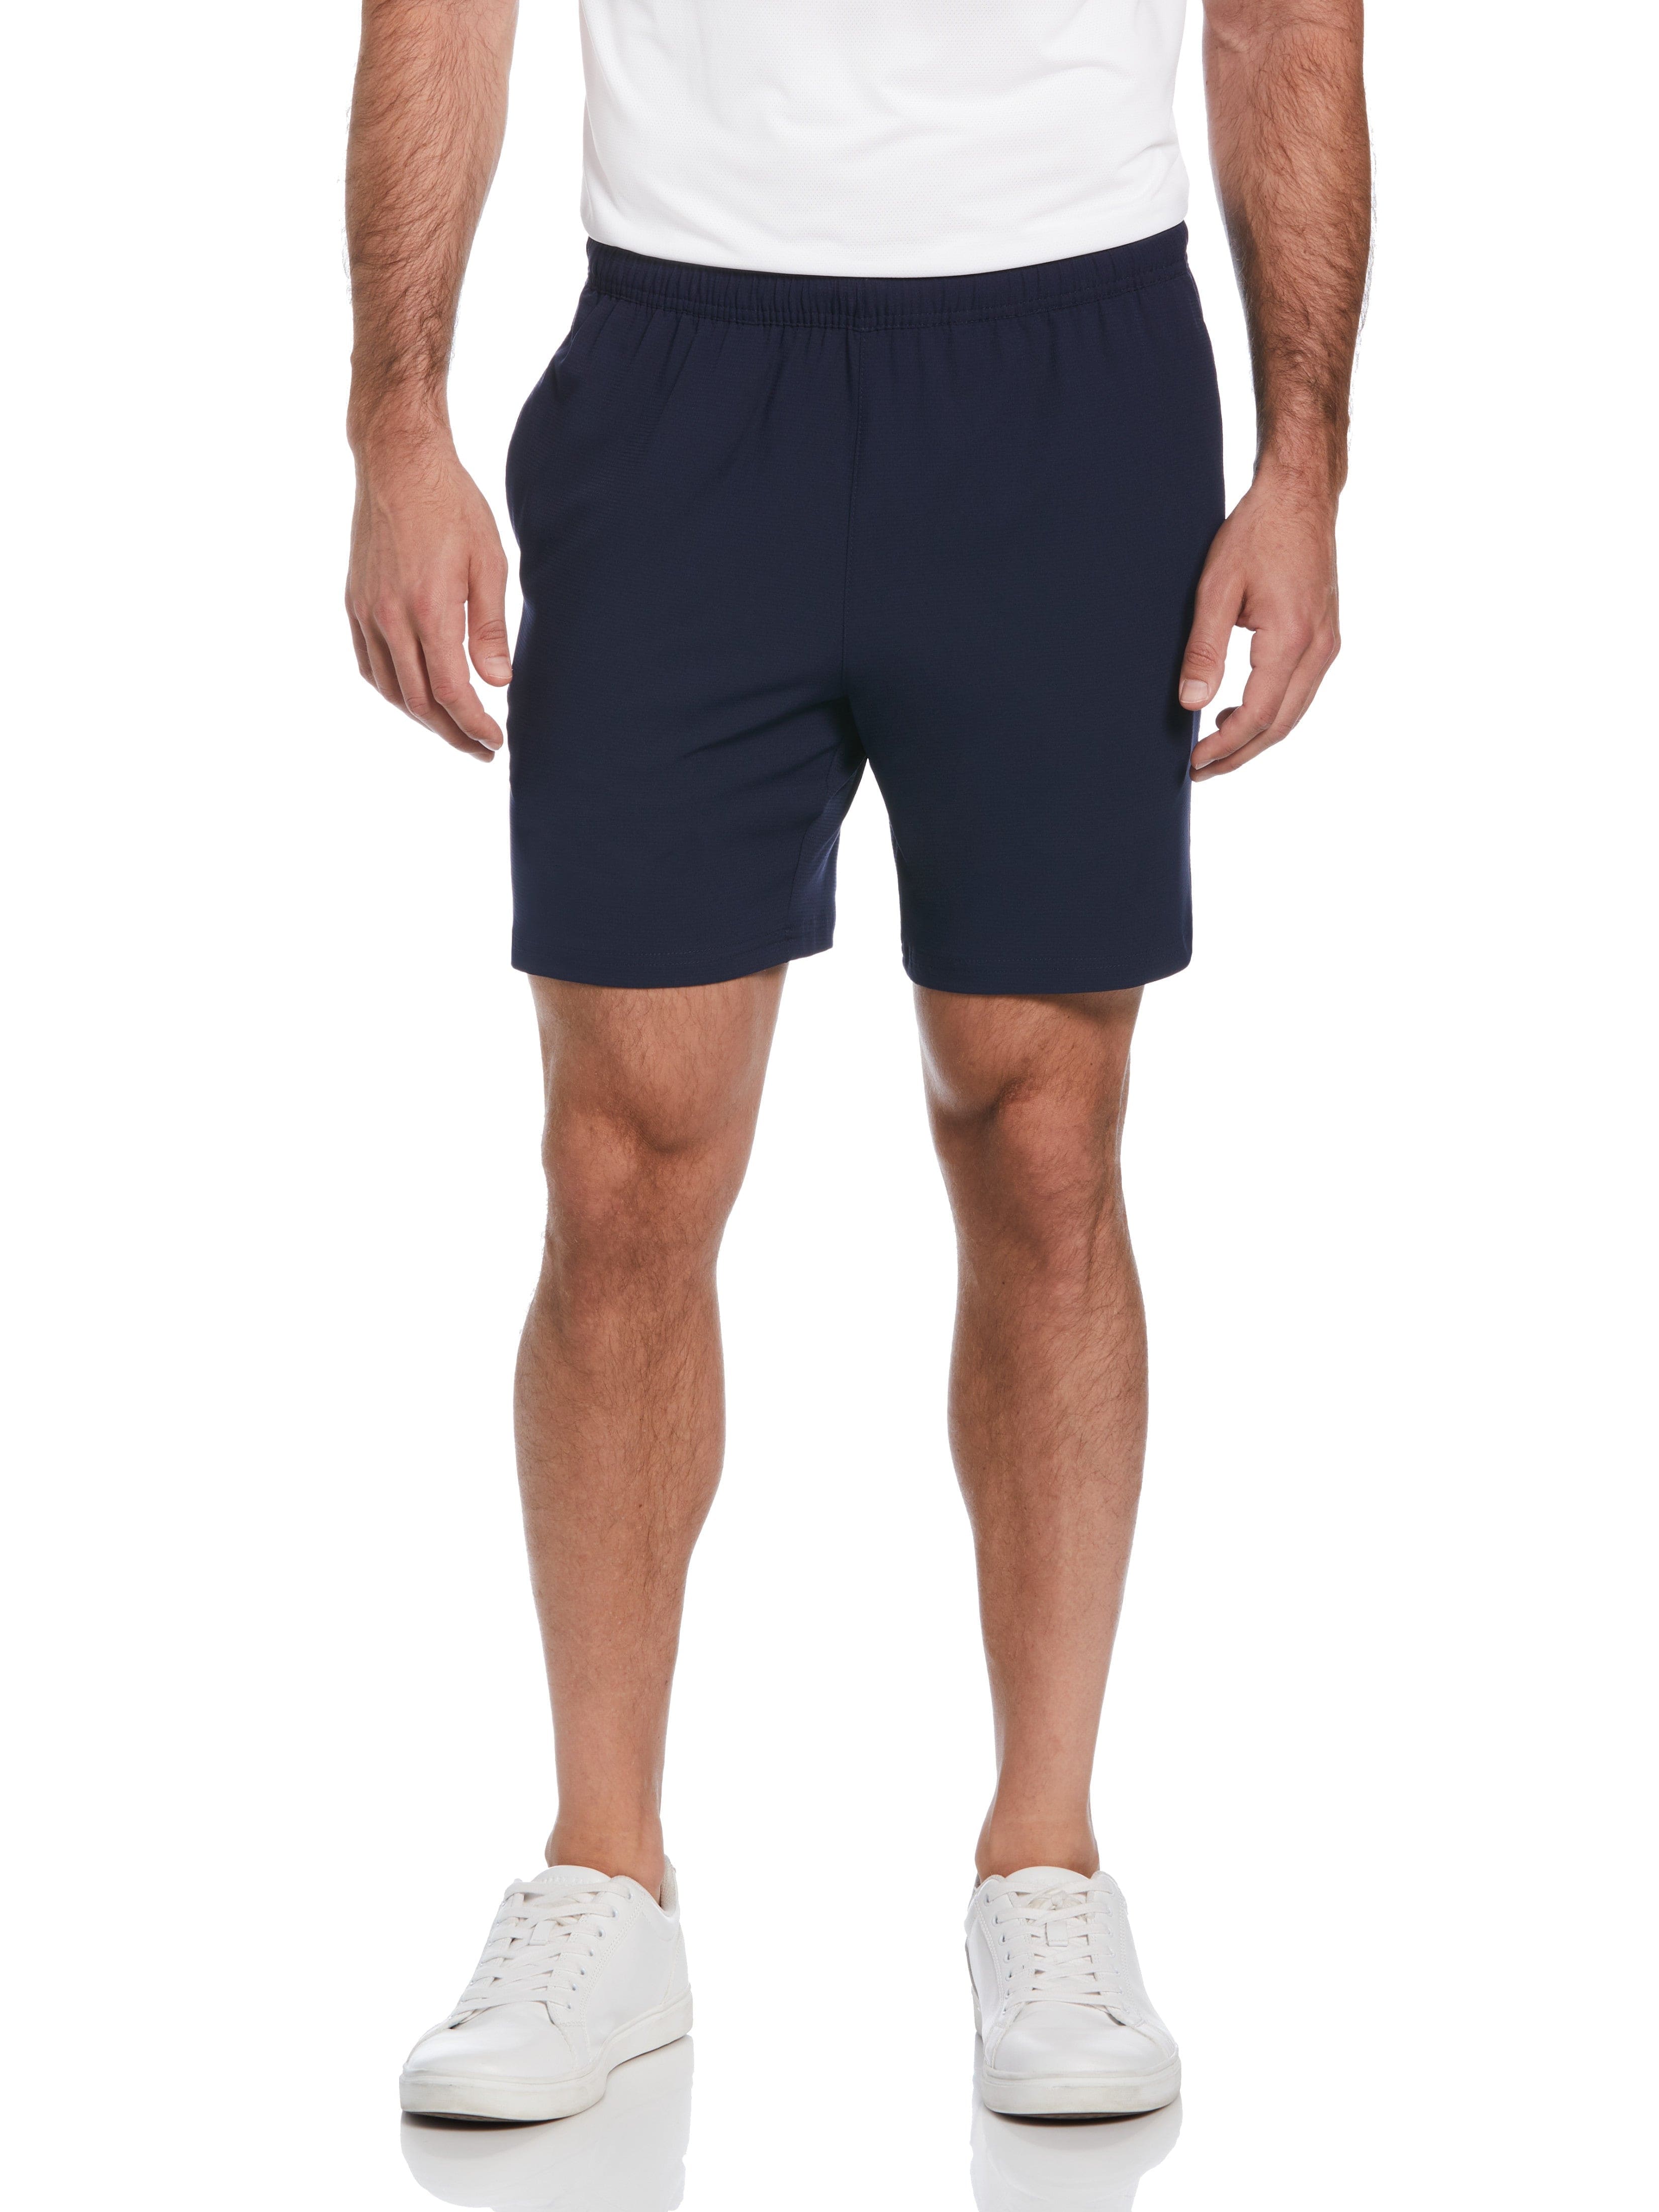 Grand Slam Mens Athletic Tennis Short, Size Medium, Navy Blue, Polyester/Elastane | Golf Apparel Shop